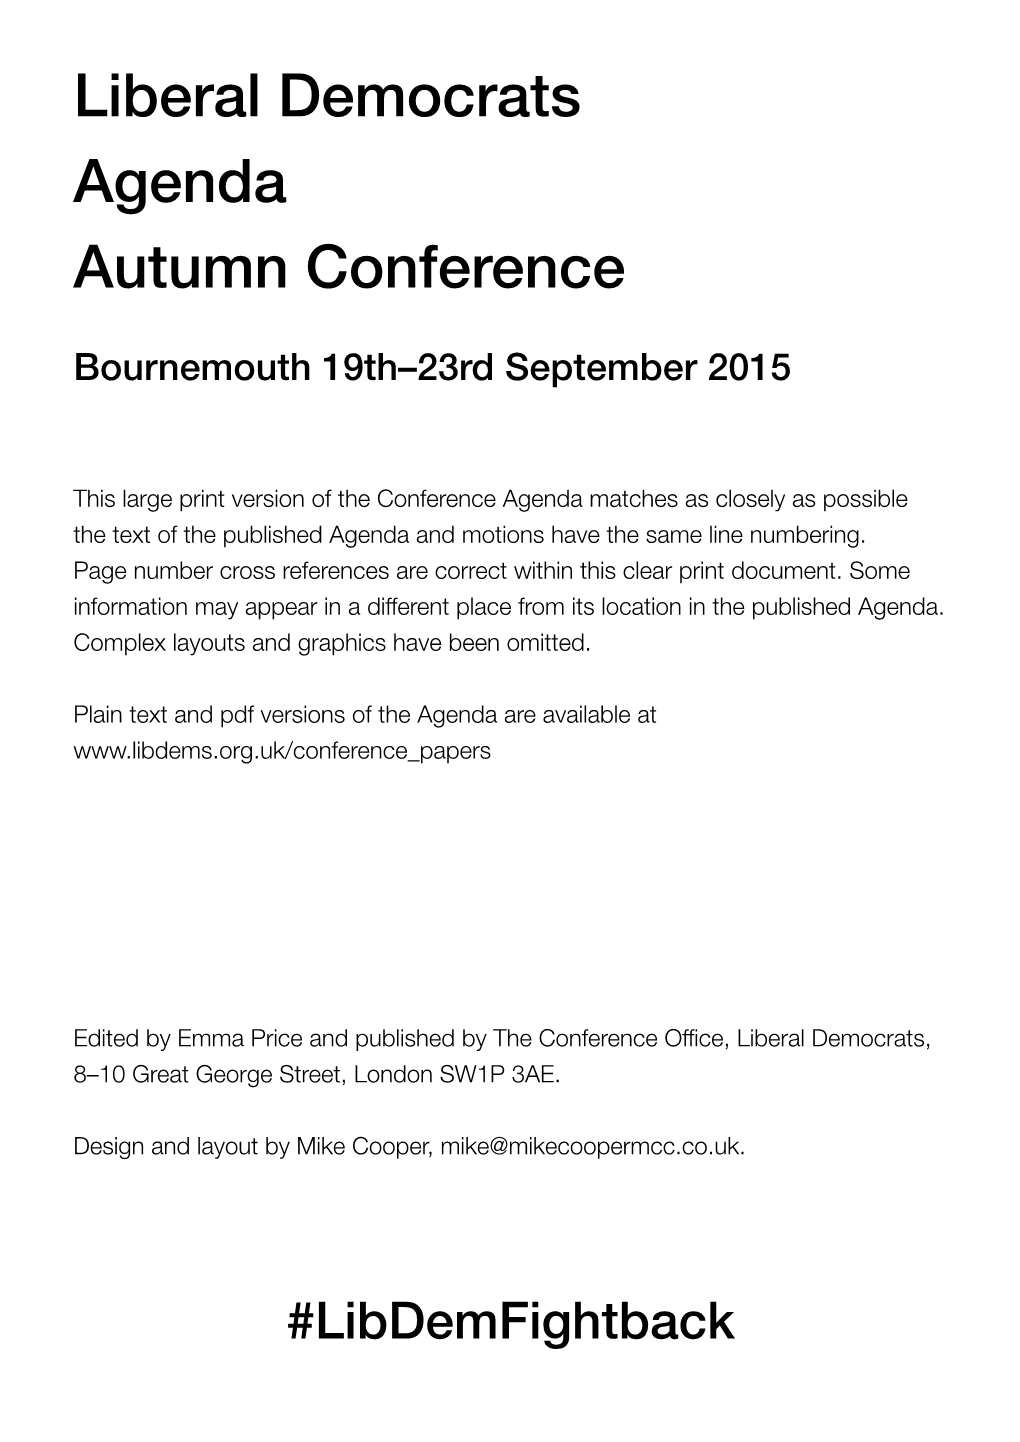 Liberal Democrats Agenda Autumn Conference